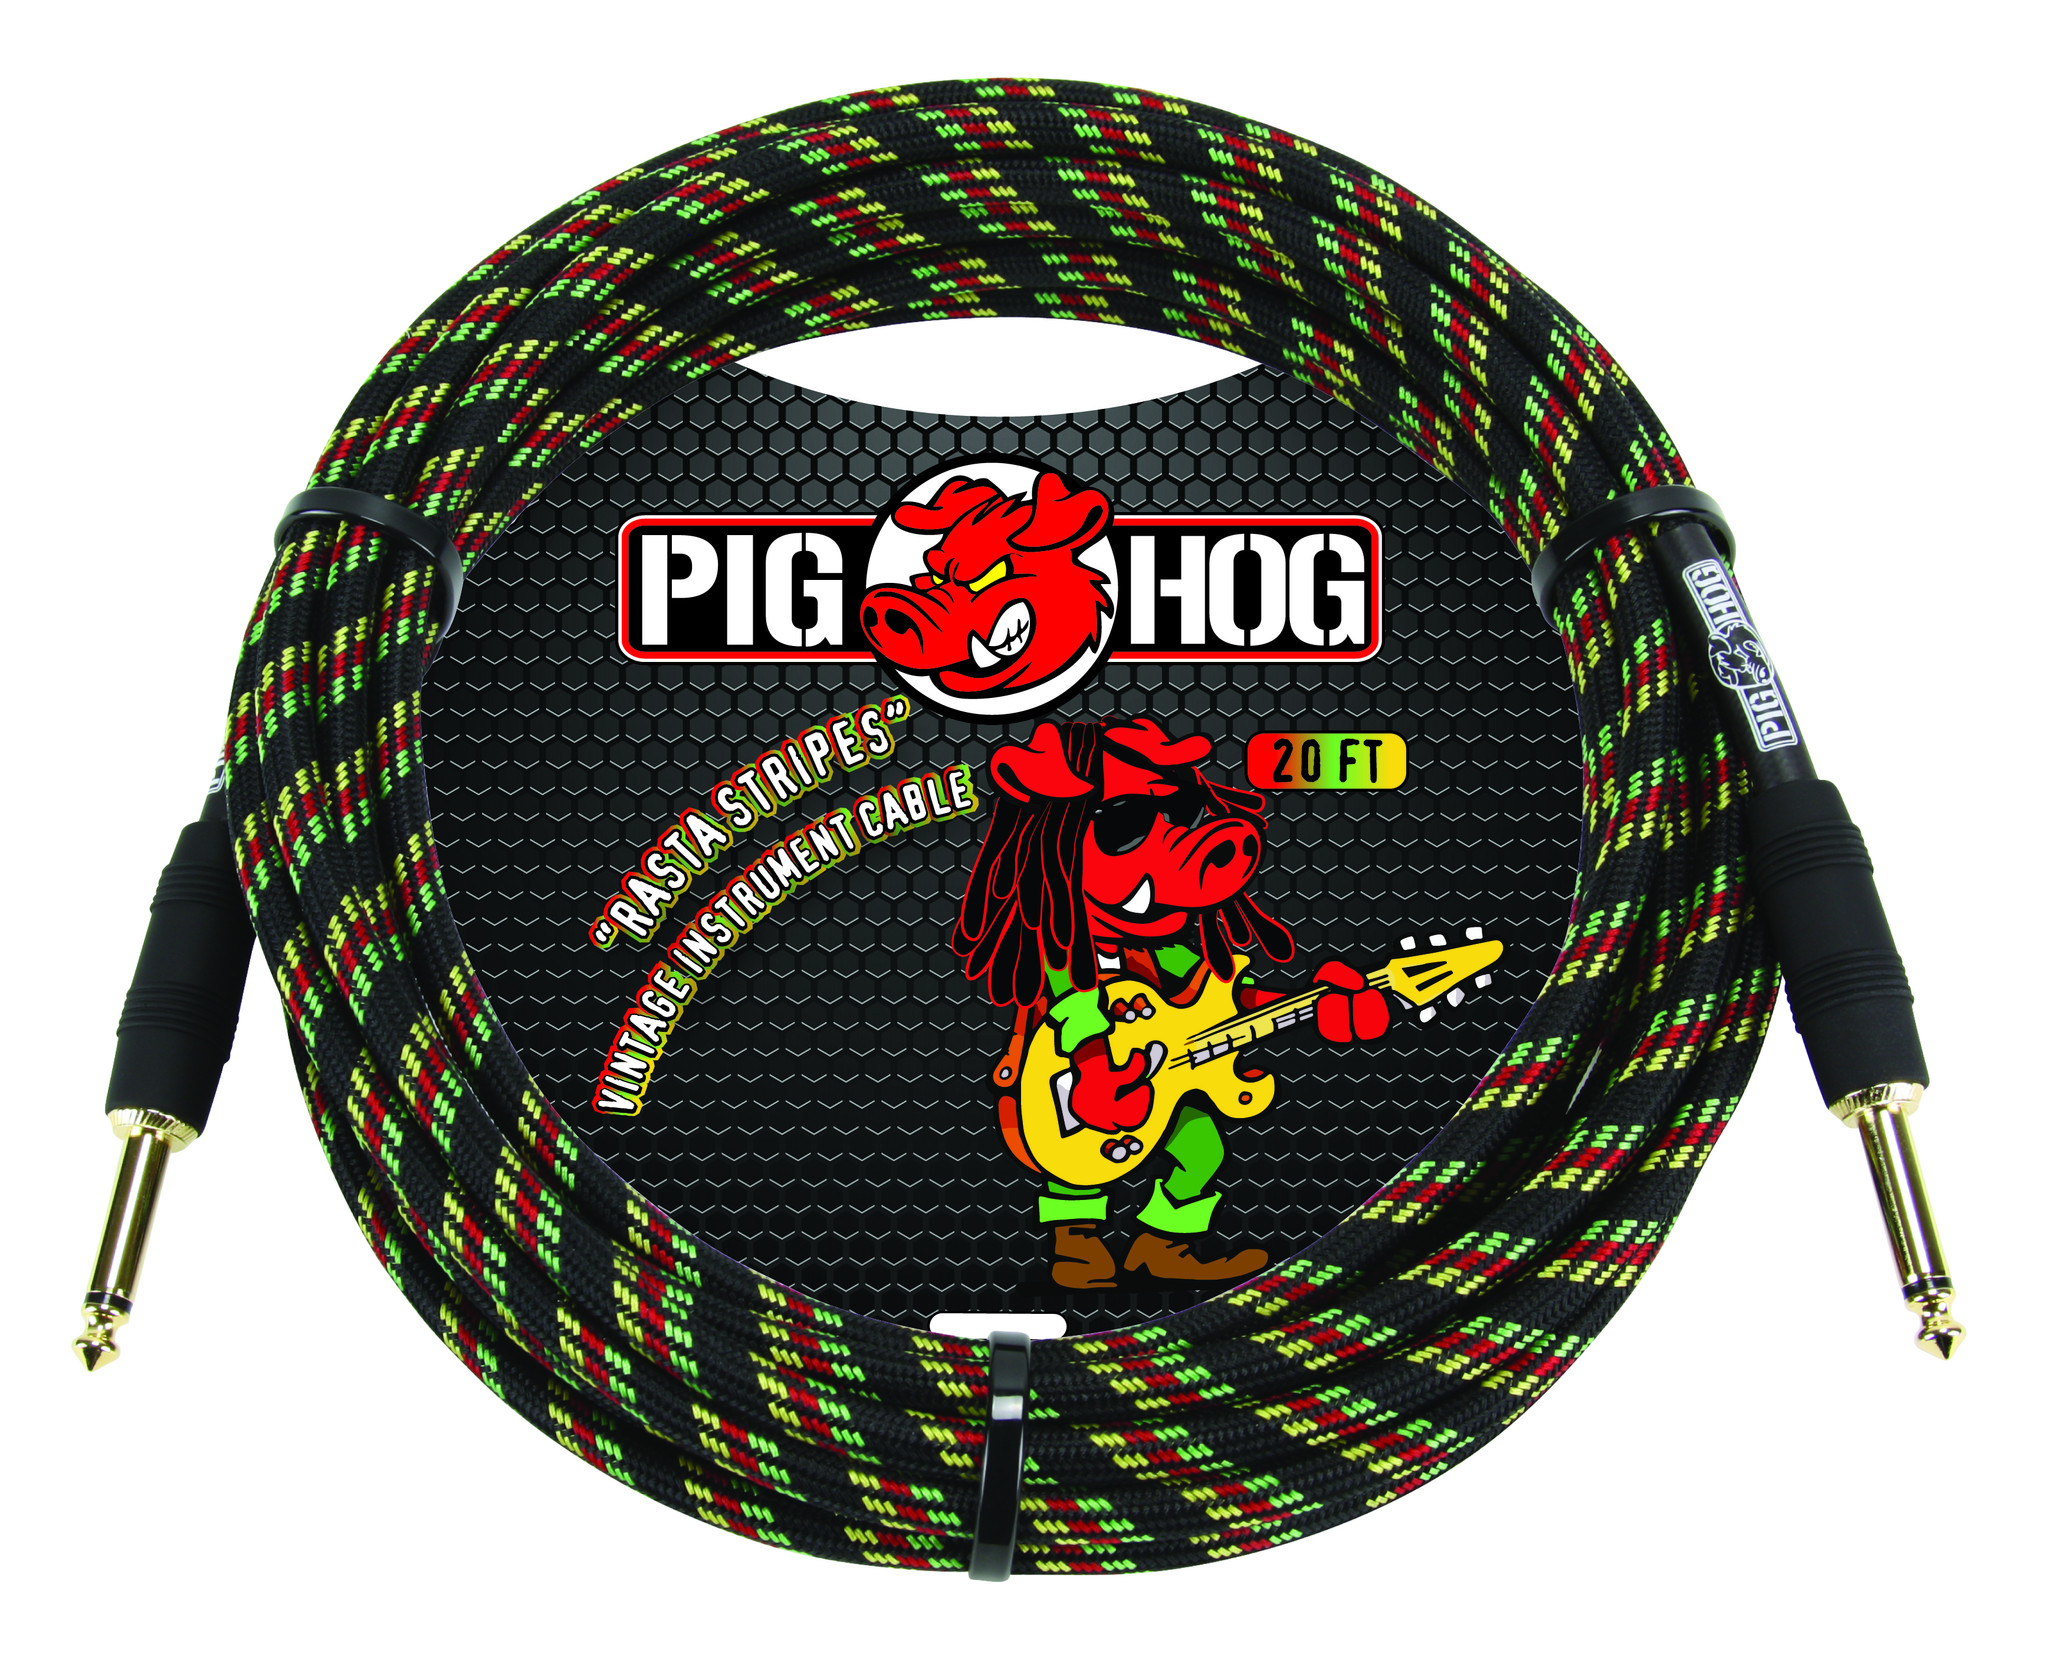 Pig Hog Ace Product Management Group PCH20RA Woven Jacket Tour Grade Instrument Cable, 20 ft. - Rasta Stripes